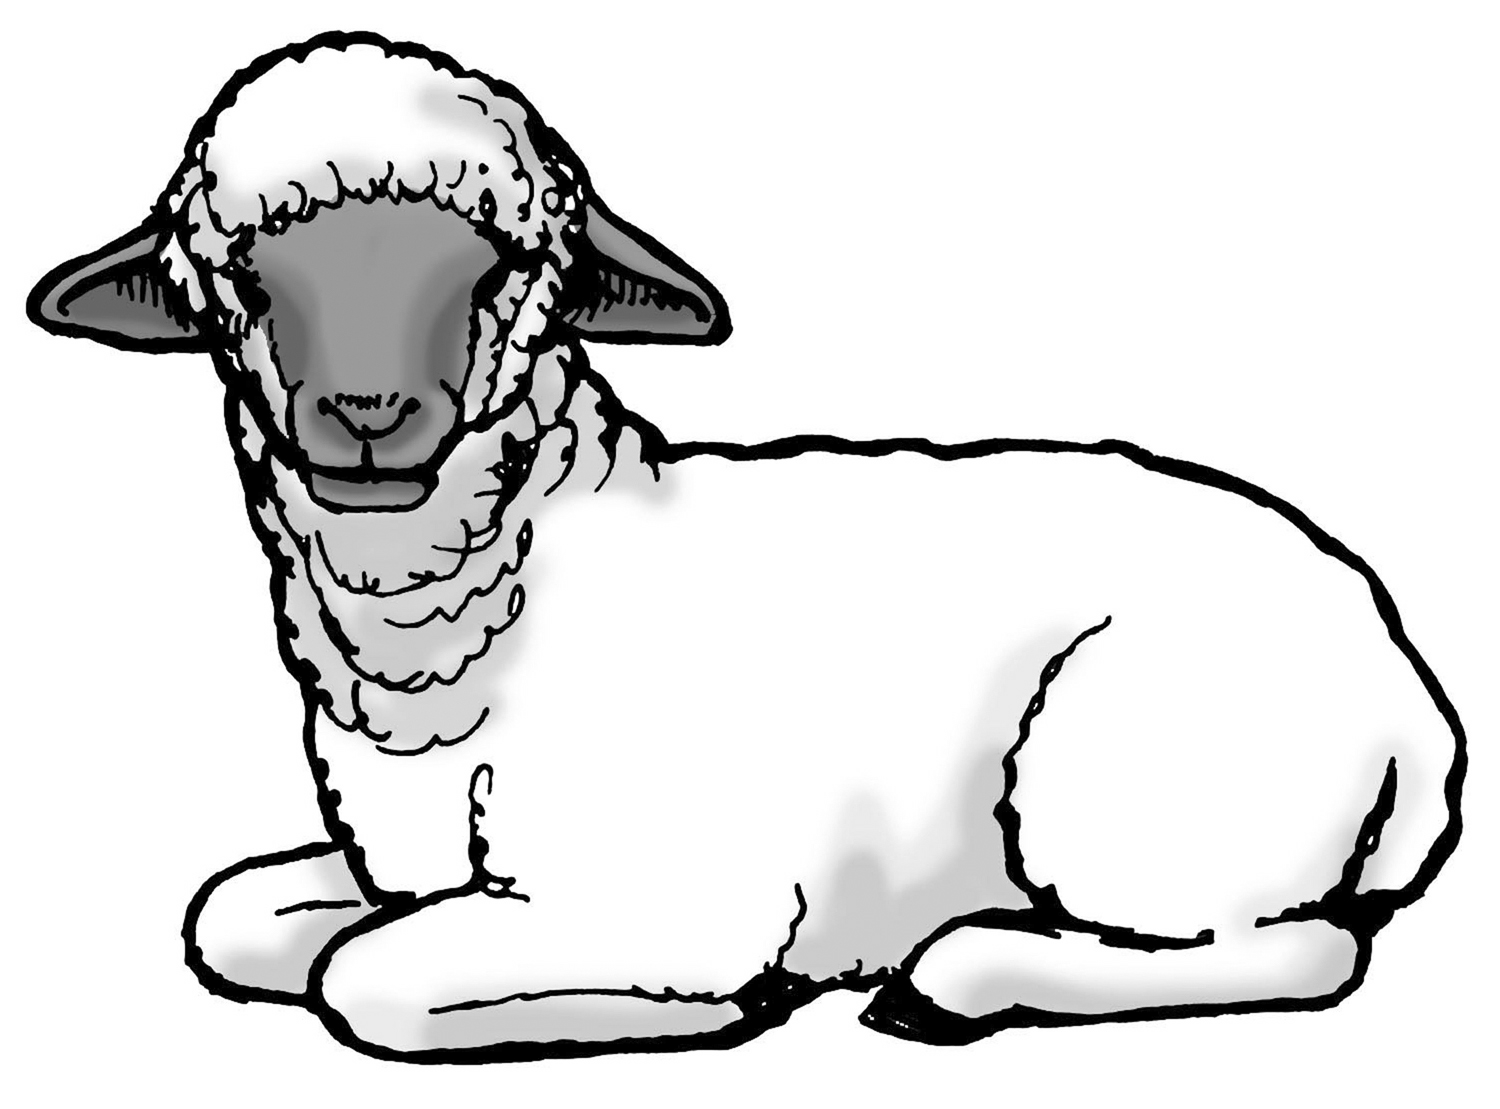 file:///D:/Nature/sheep01_gs.jpg